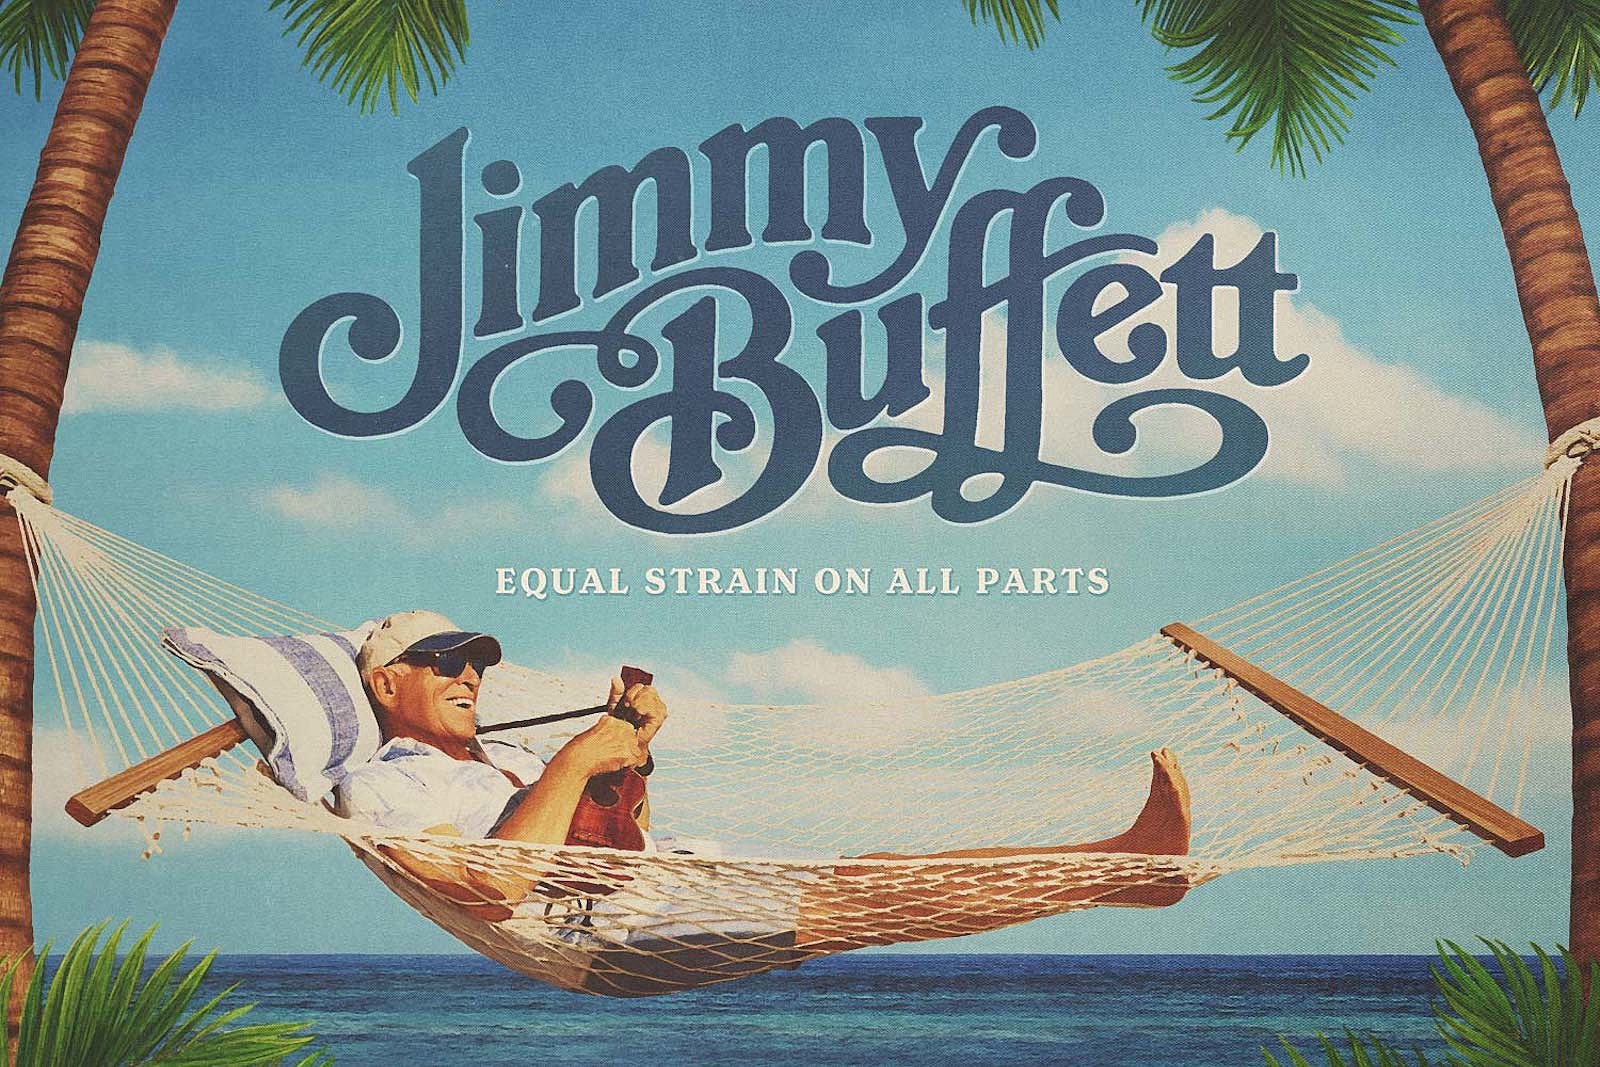 Posthumous Jimmy Buffett Album Set to Arrive This Fall